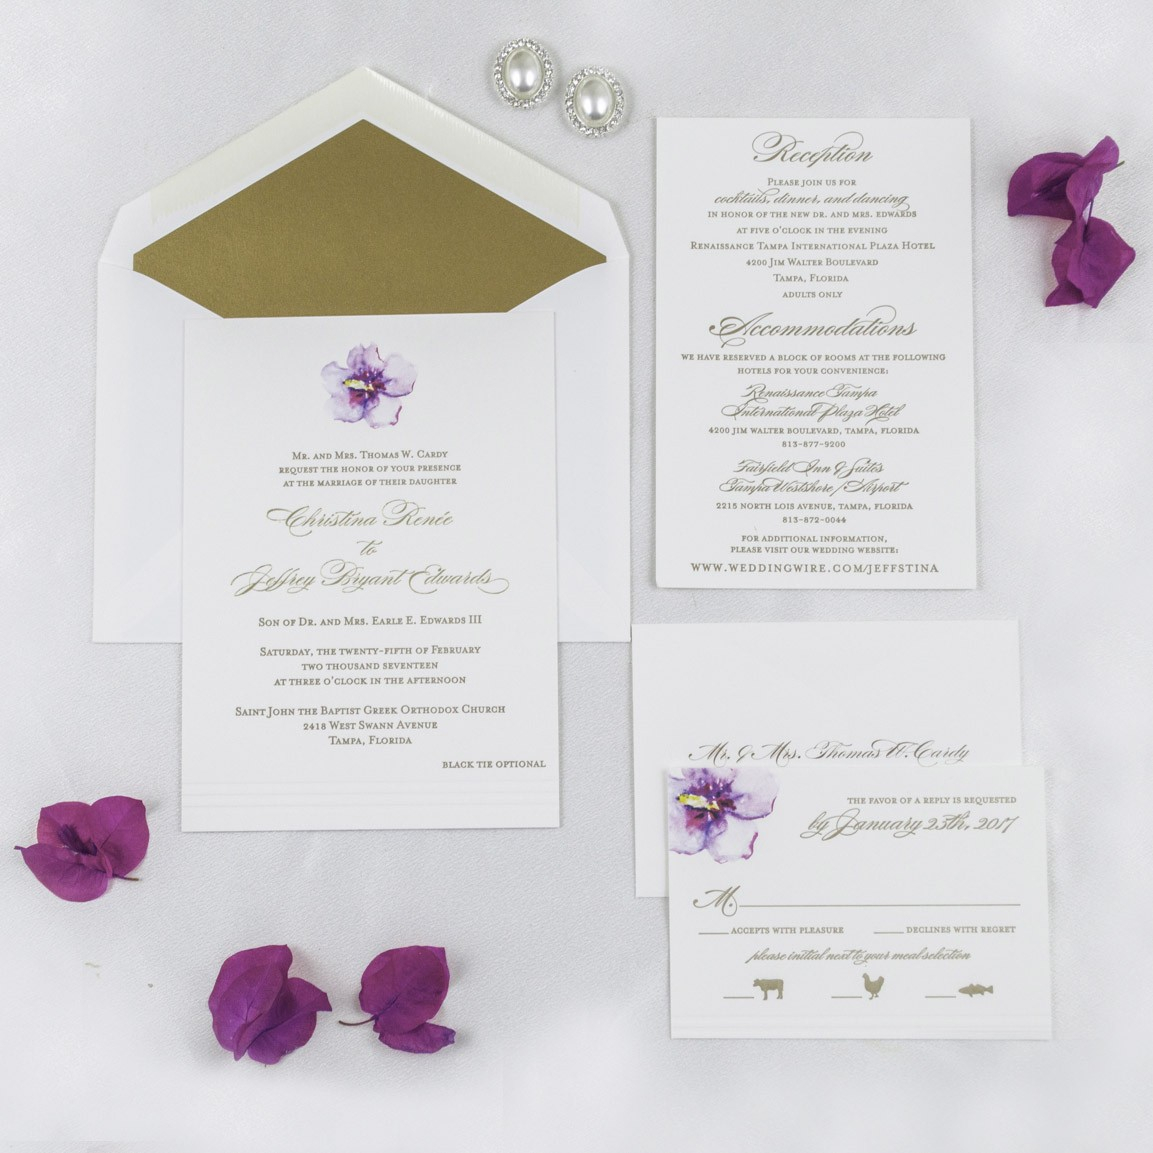 Affordable Letterpress Wedding Invitations Wedding Invitations Tampa Great Affordable Letterpress Wedding